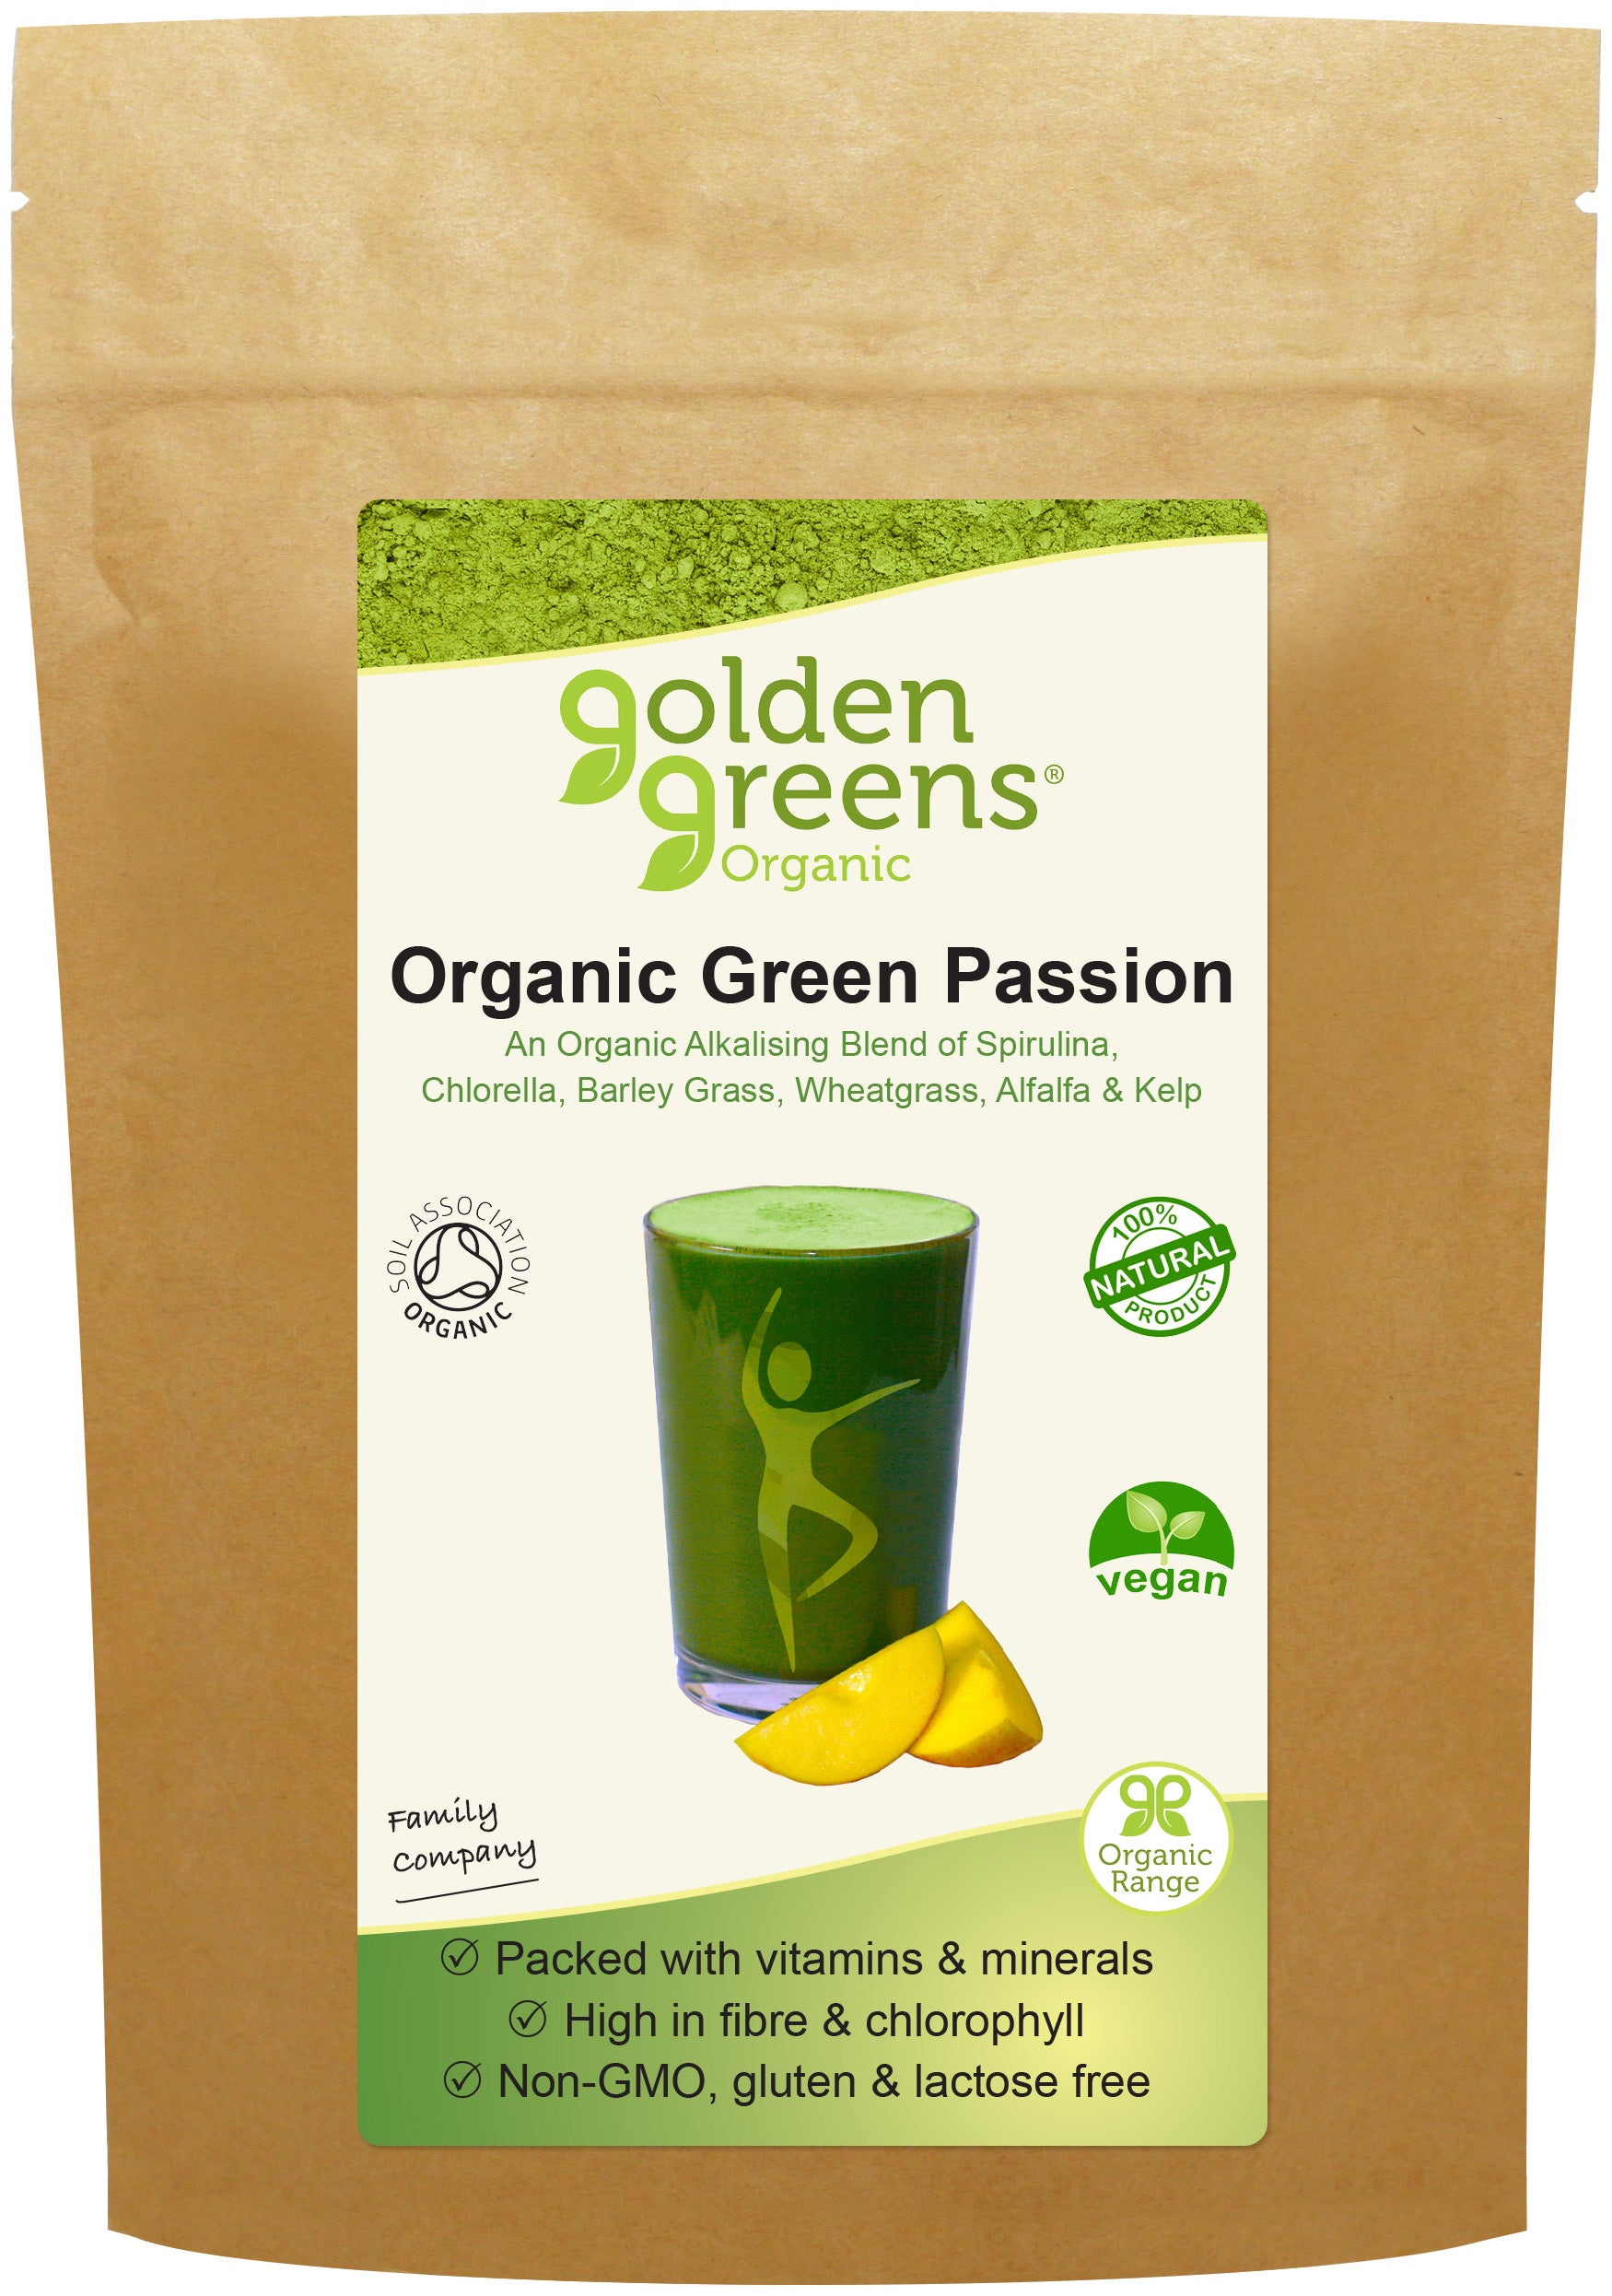 Golden Greens (Greens Organic) Organic Green Passion